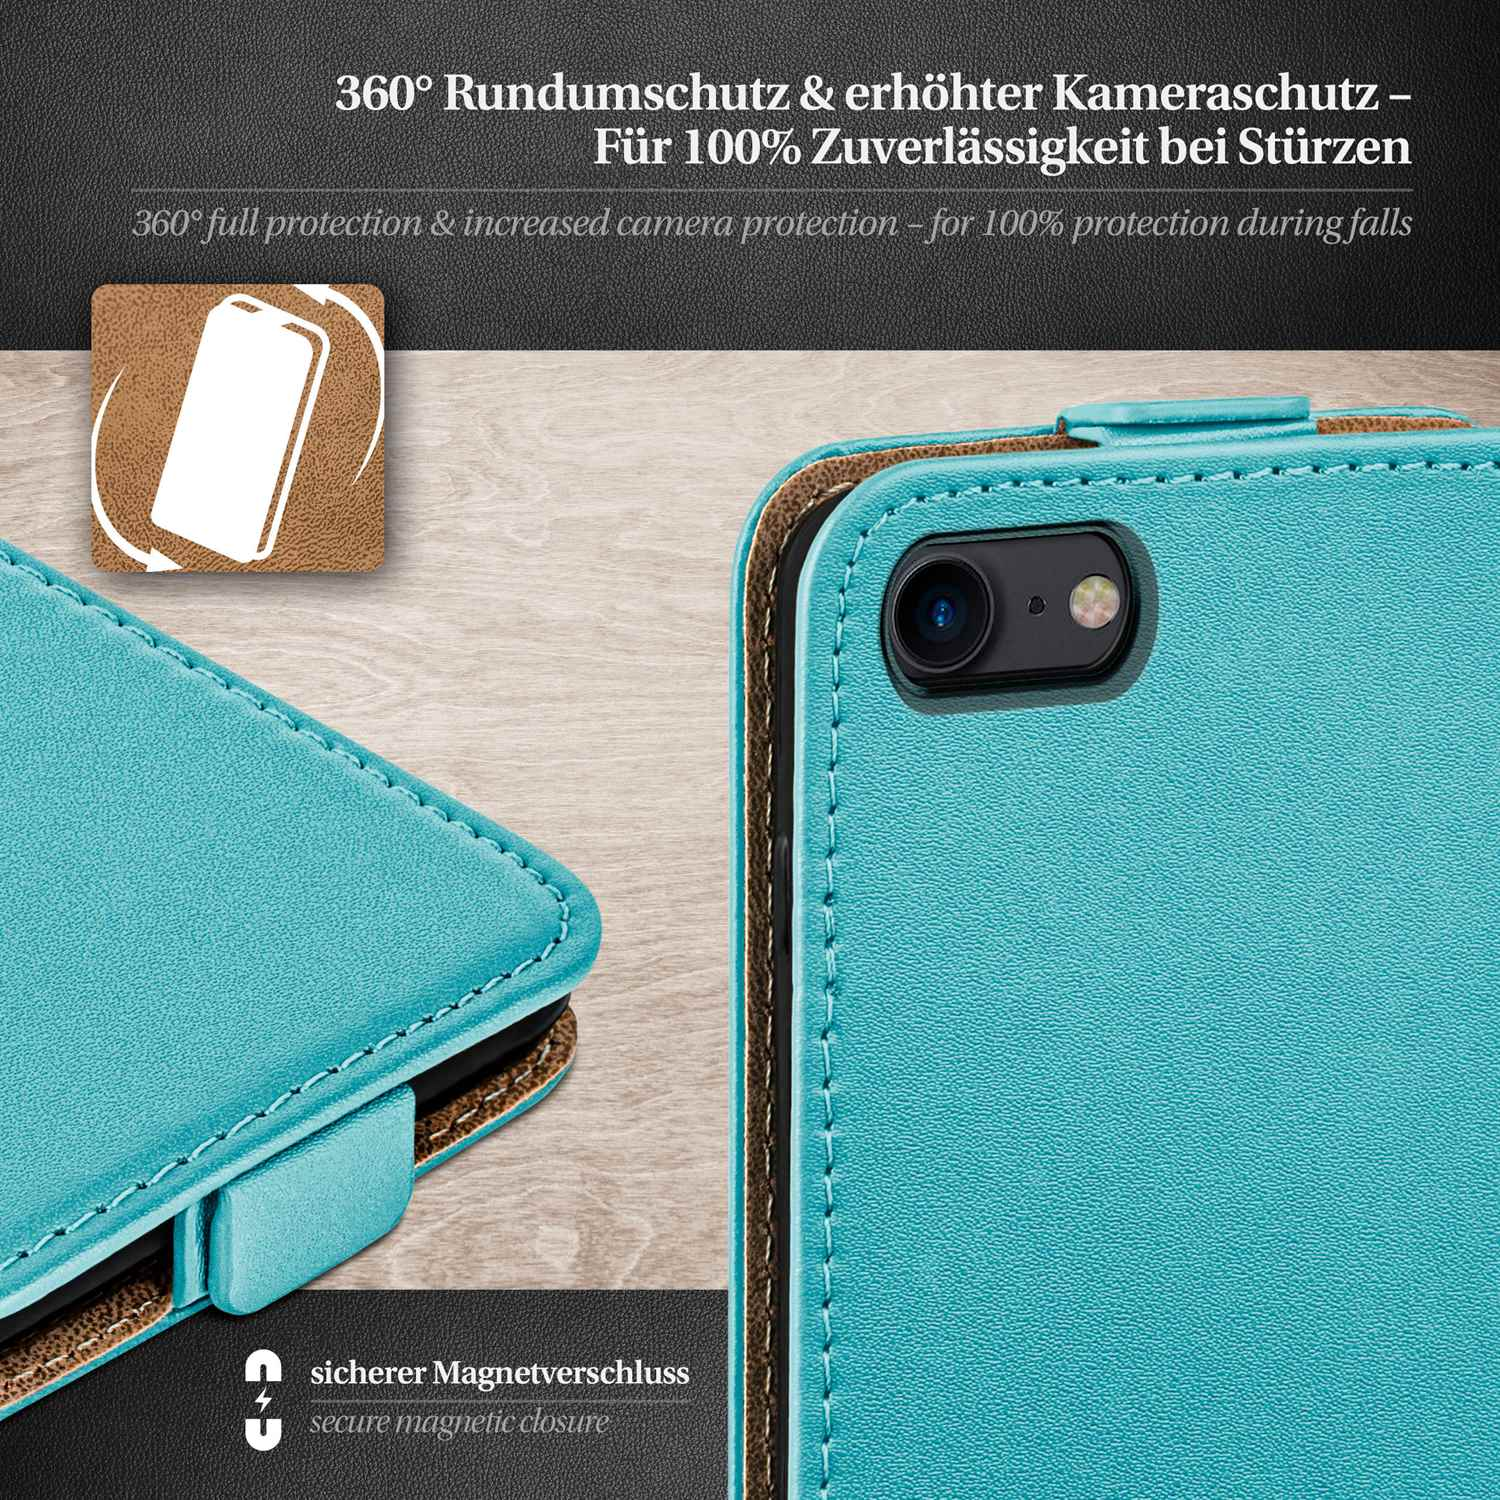 Case, Aqua-Cyan Flip iPhone MOEX Flip Apple, 7, Cover,